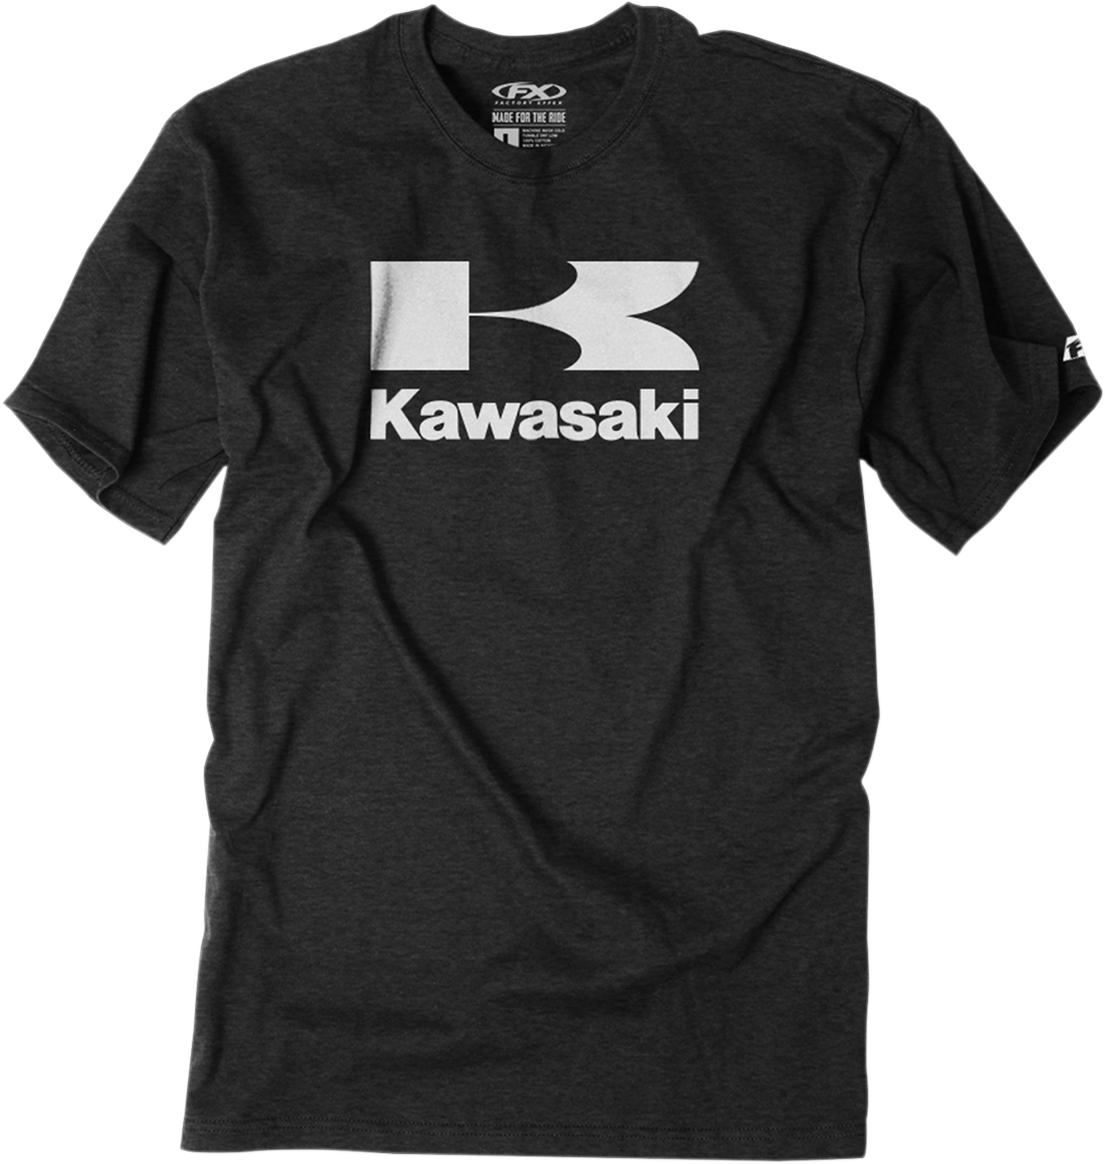 FACTORY EFFEX Kawasaki Flying-K T-Shirt - Charcoal - Medium 22-87112